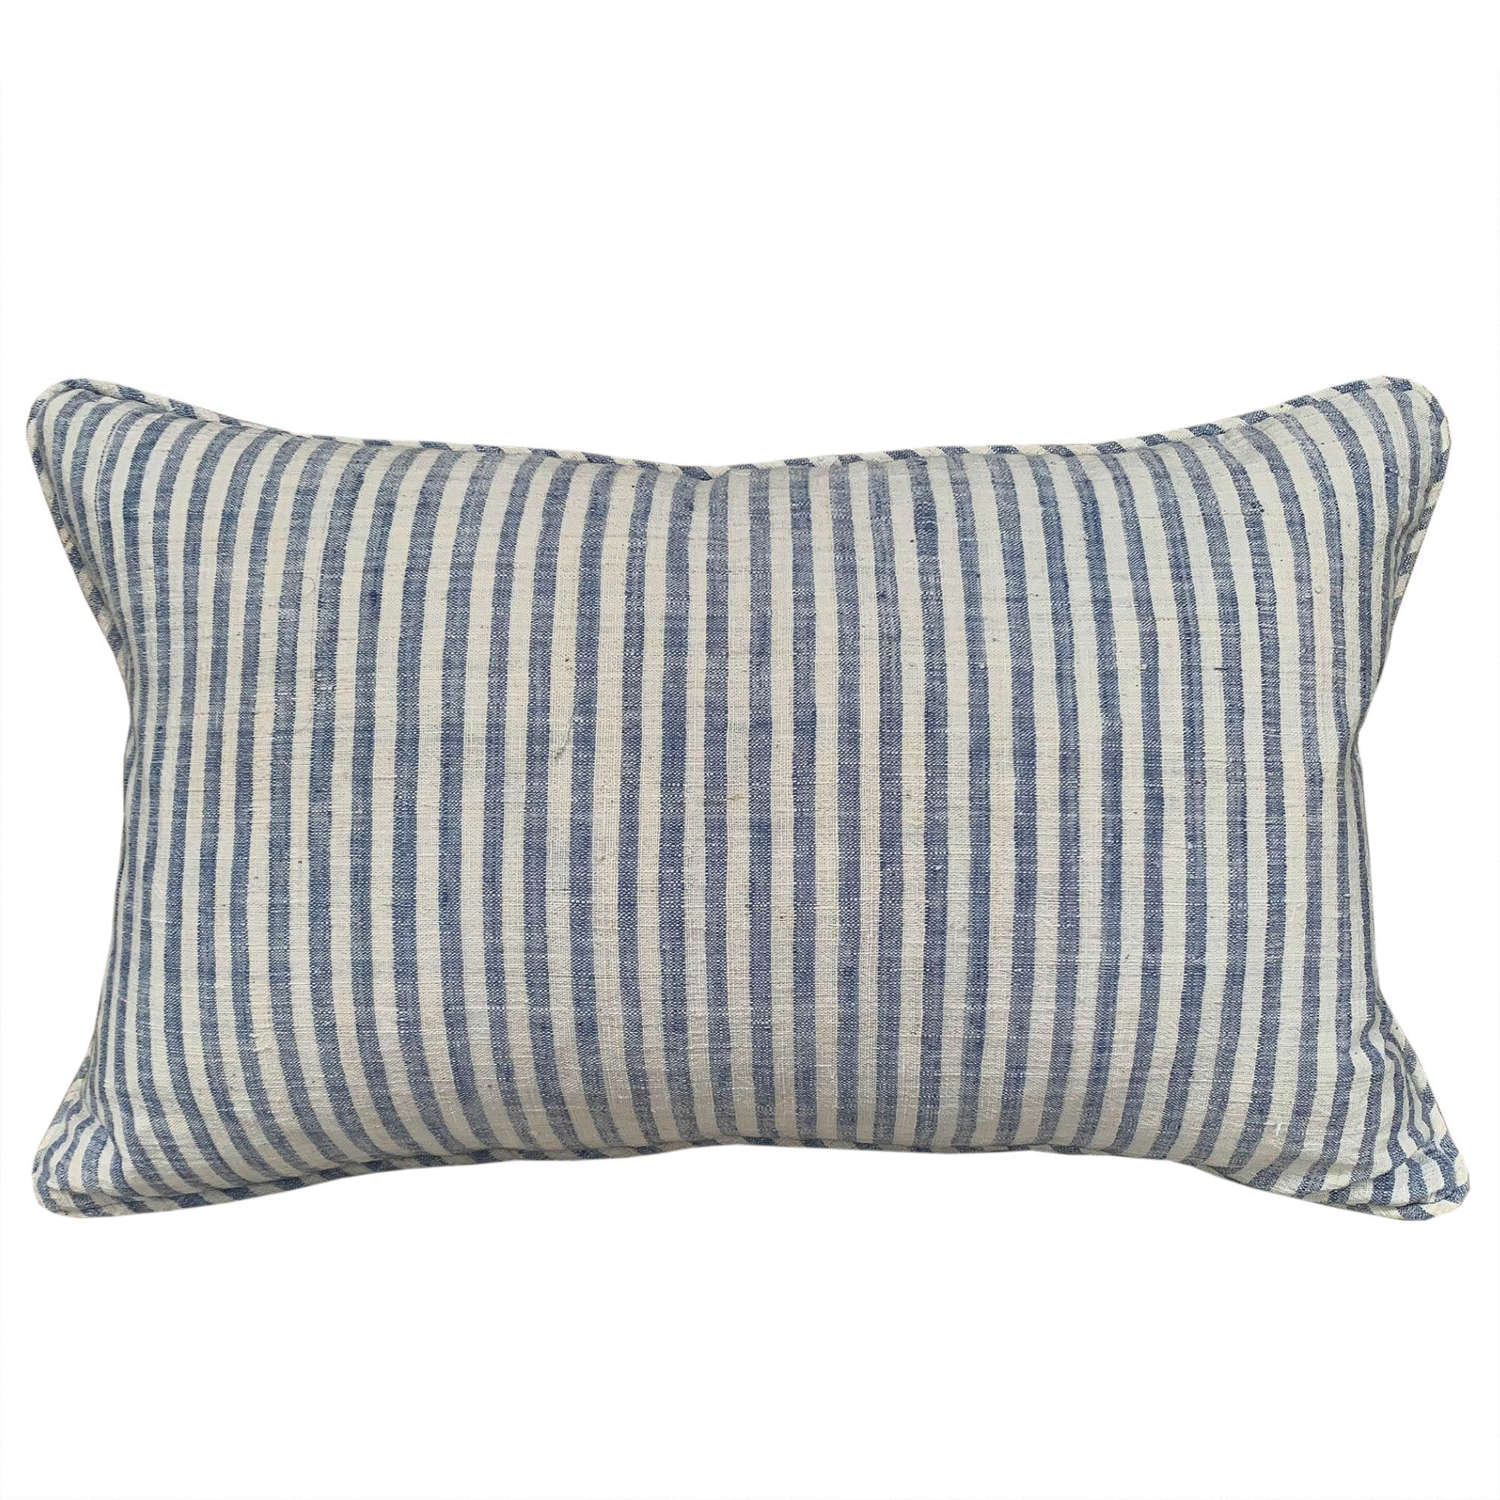 Indigo striped cushion